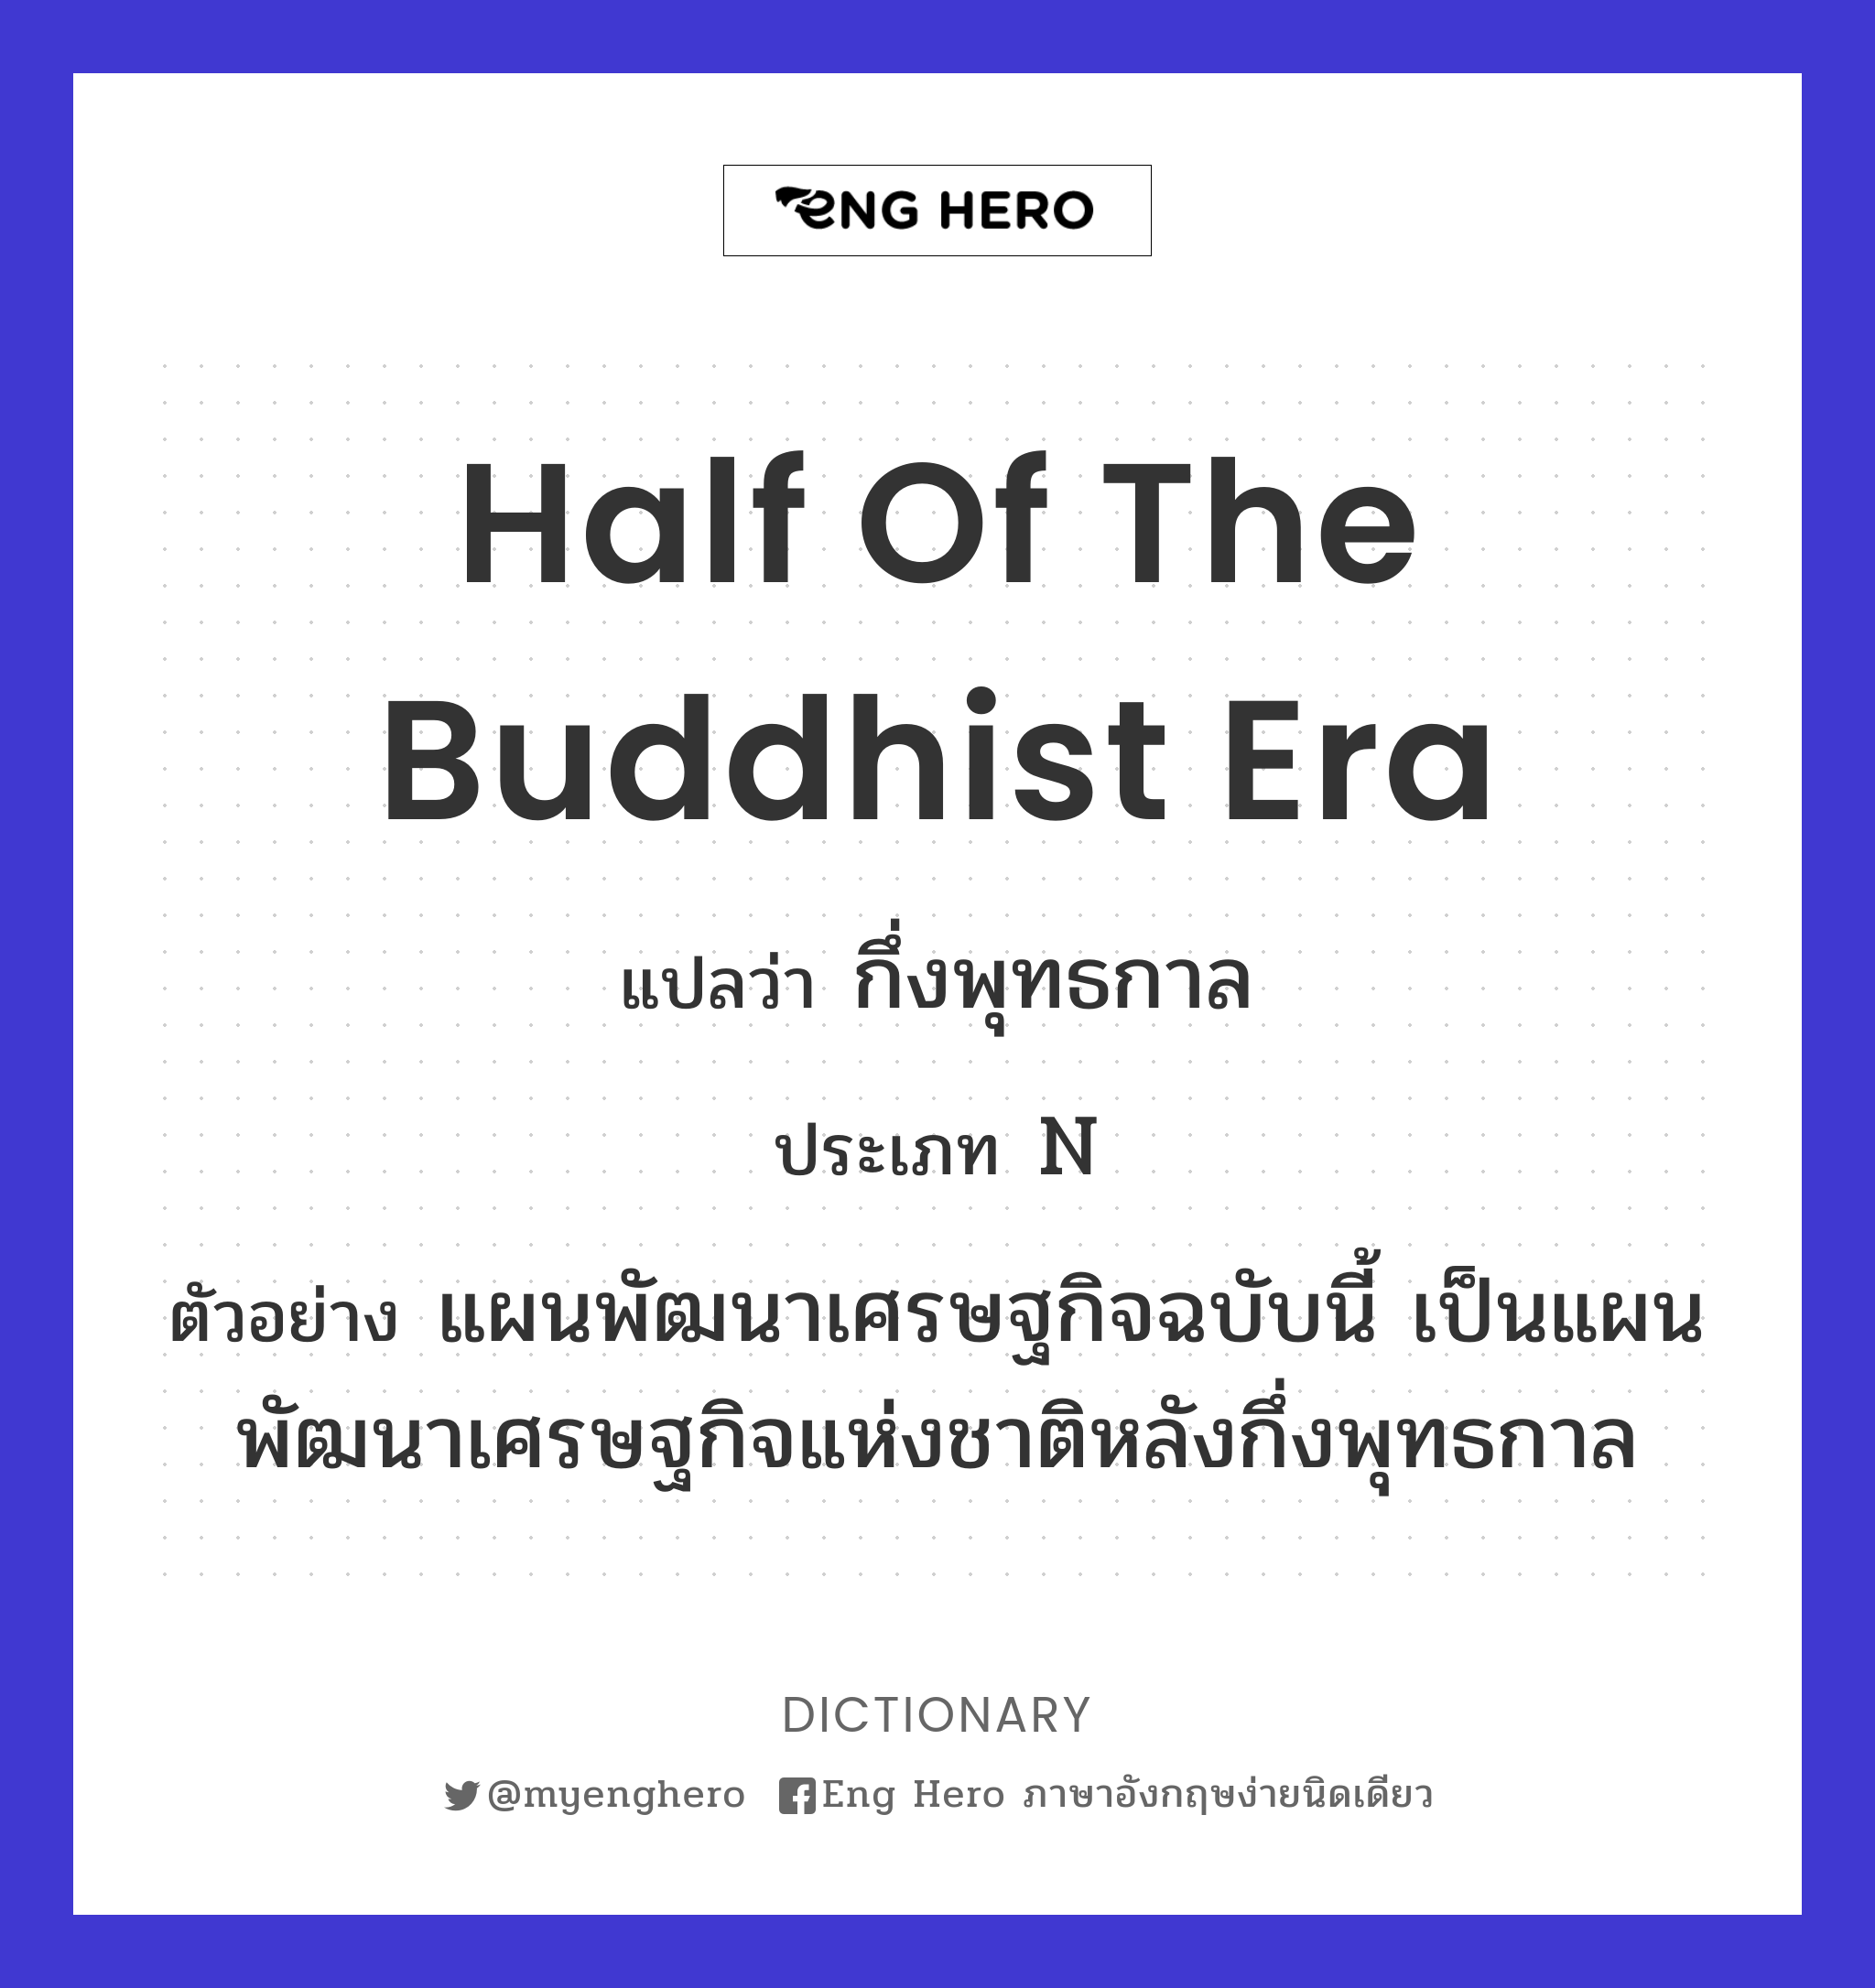 half of the Buddhist era